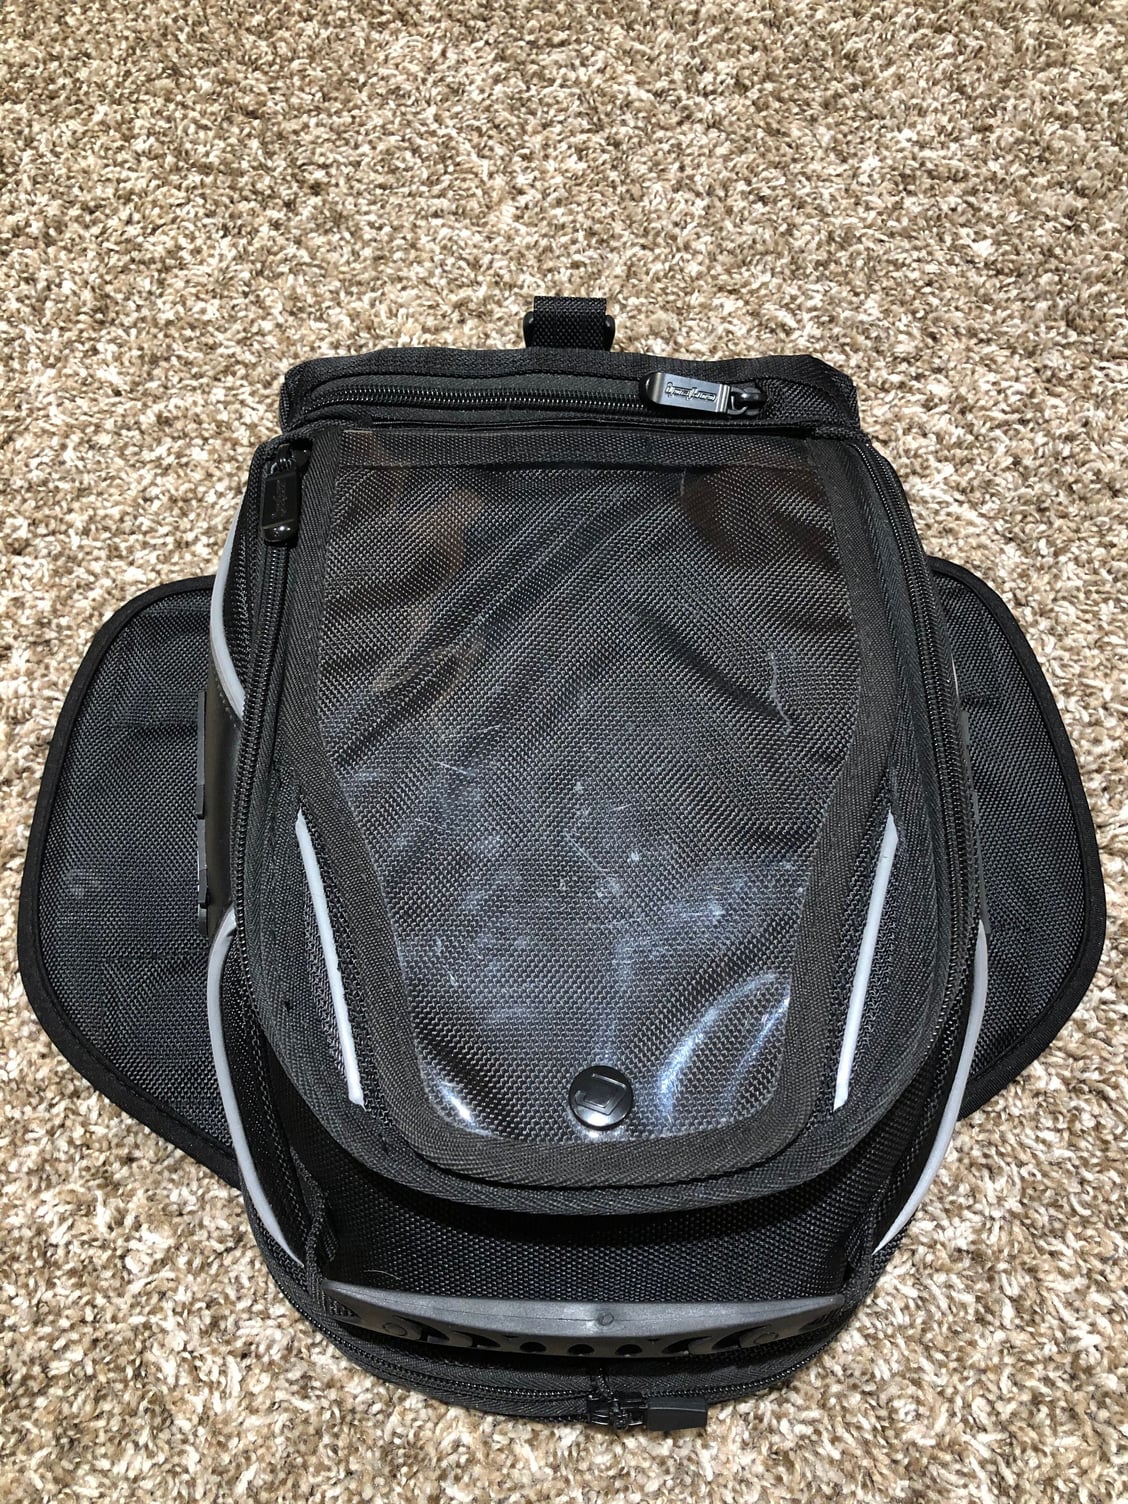 Cortech Super 2.0 Low Profile Tank Bag - Harley Davidson Forums